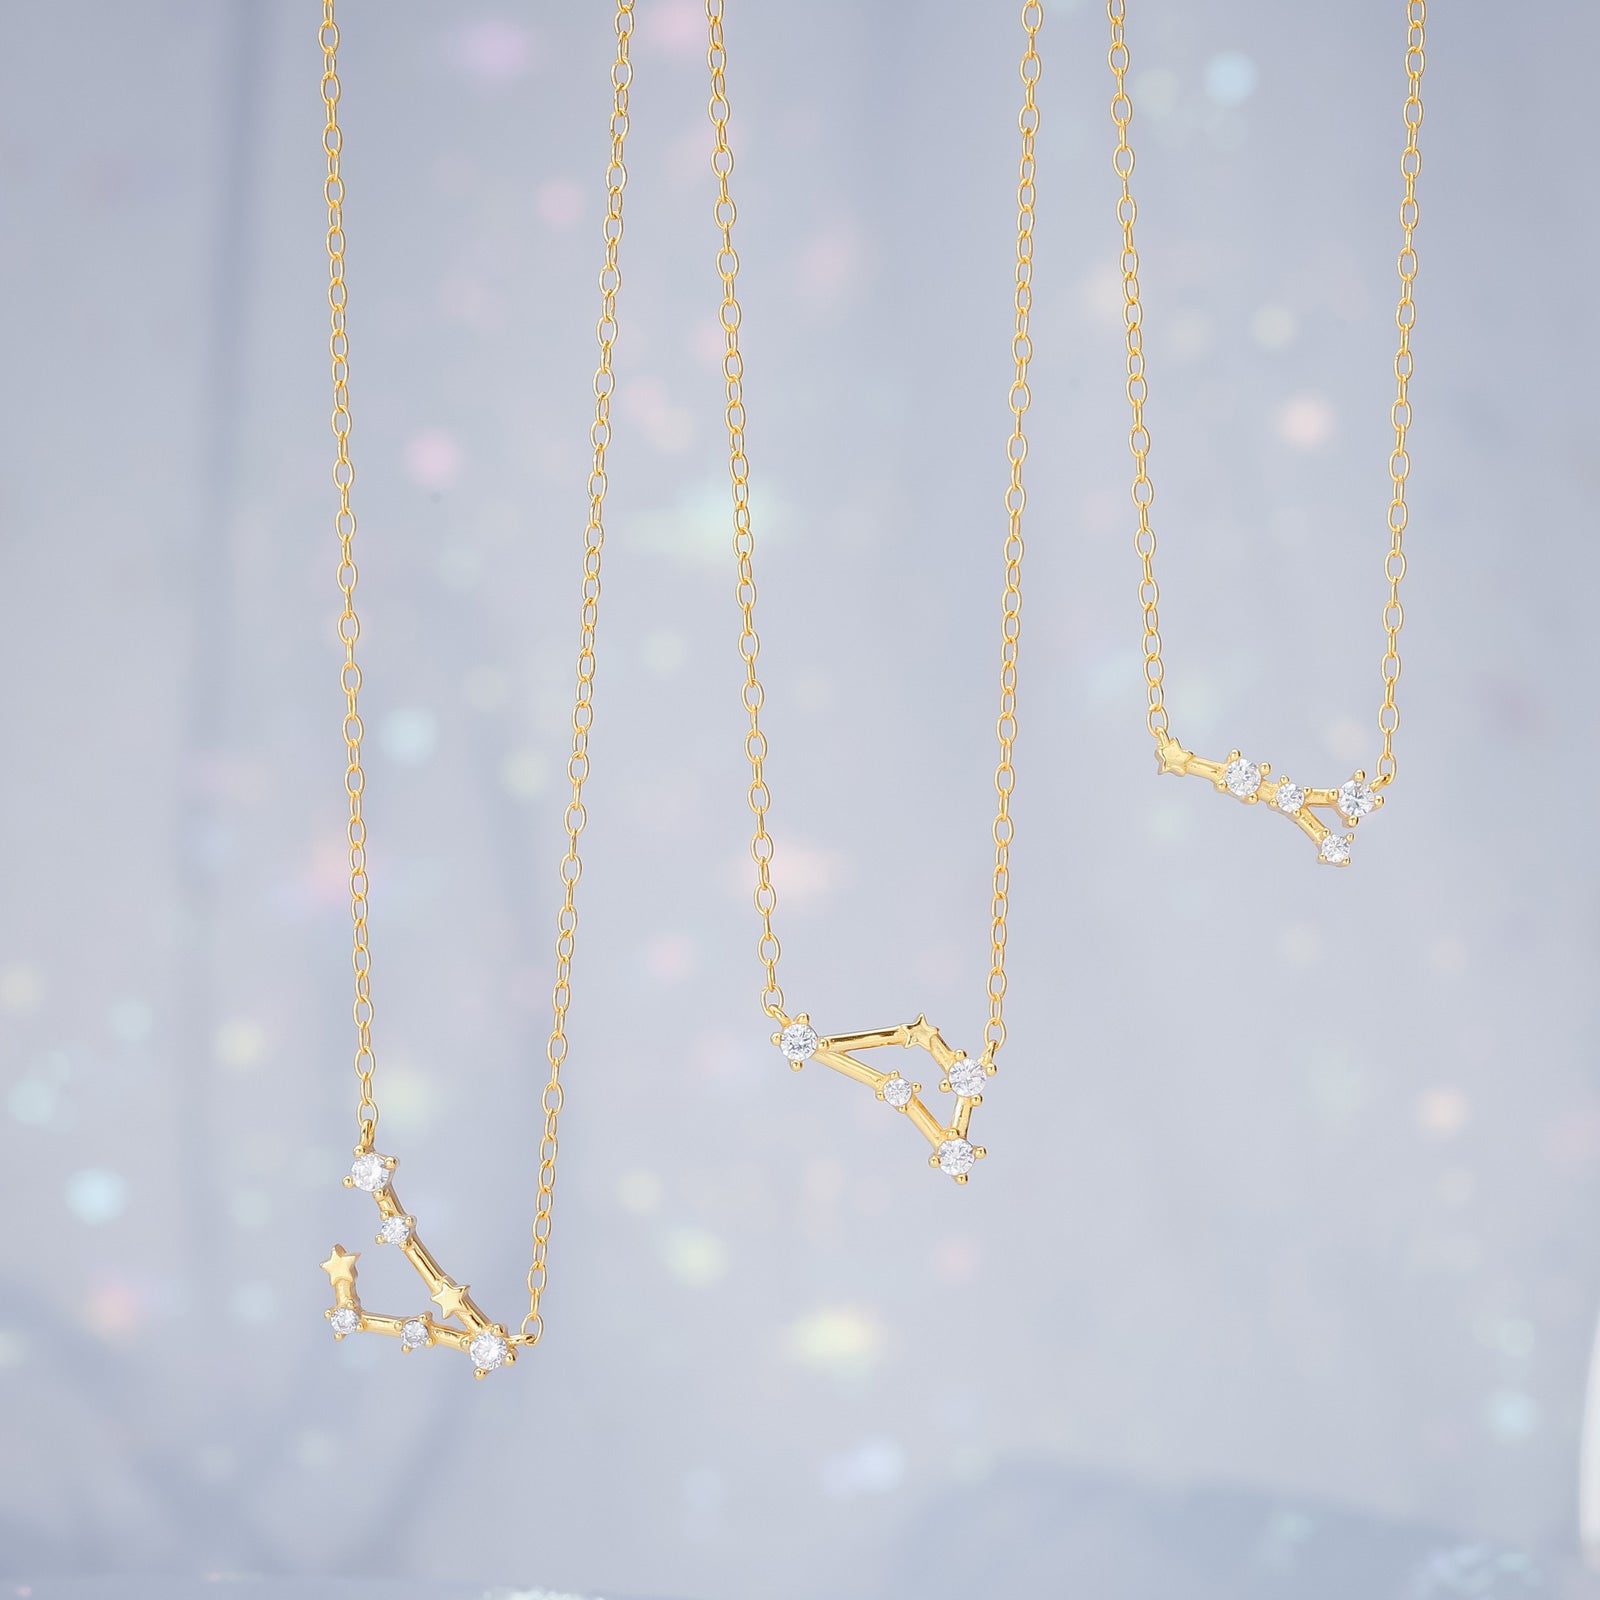 Silver Cancer Constellation Necklace Set